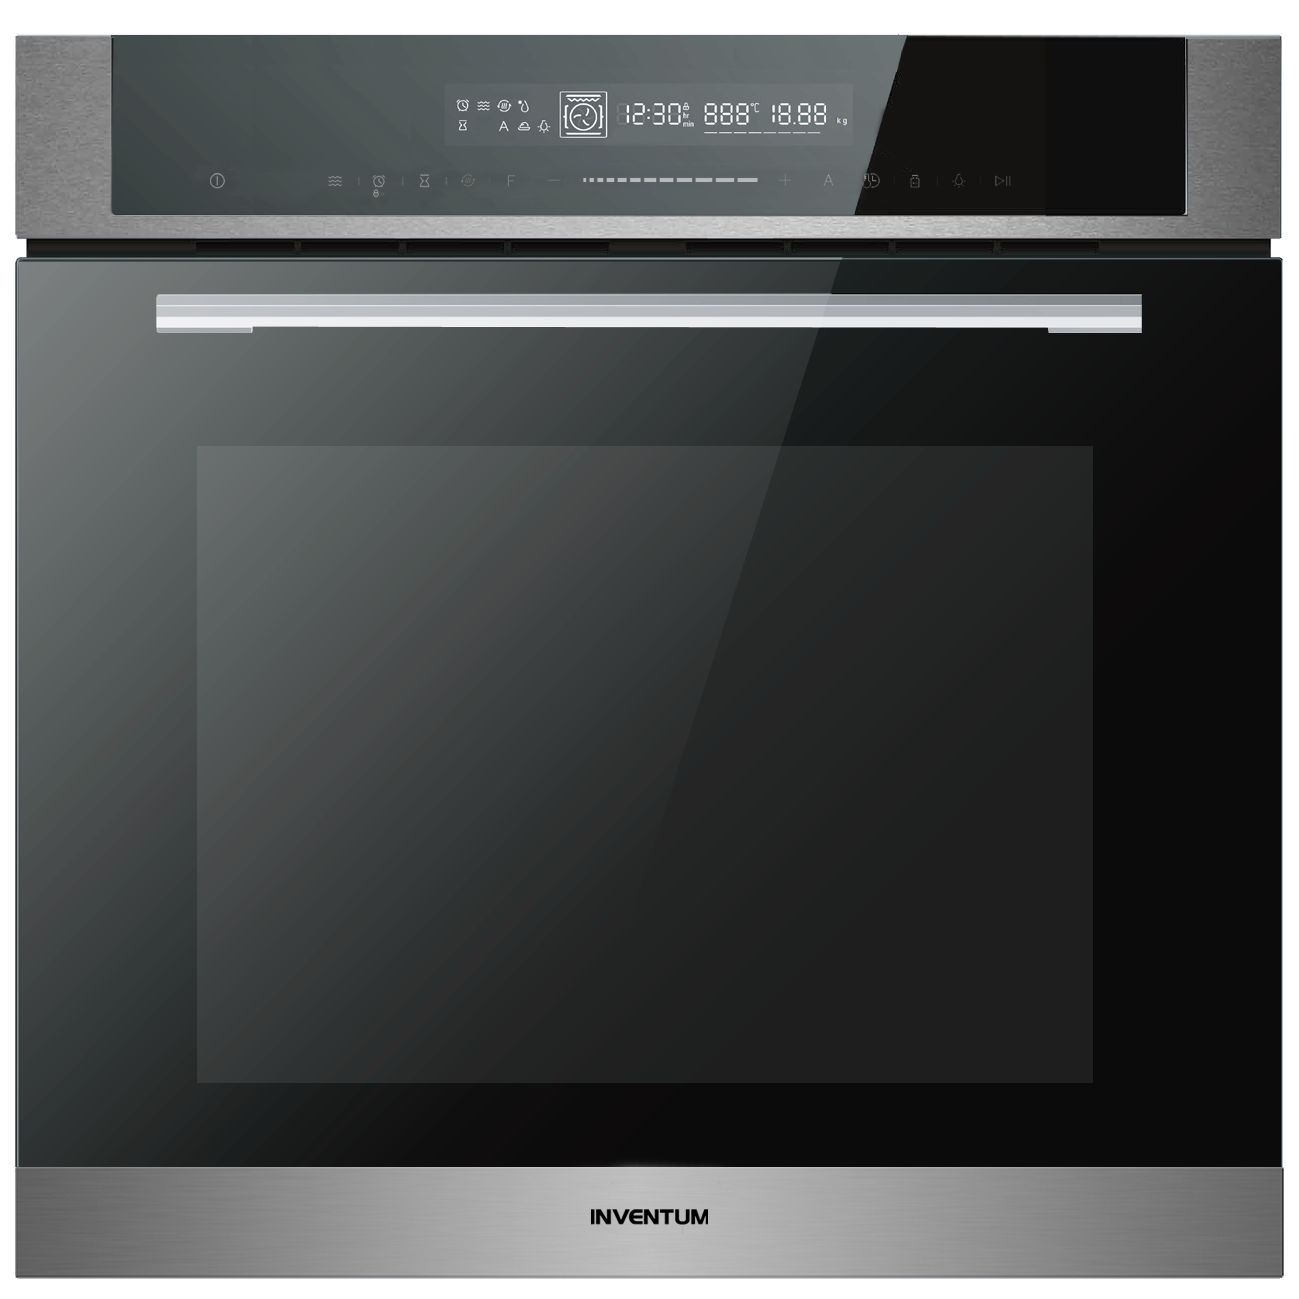 INVENTUM MK010 Built-In Microwave Oven User Manual